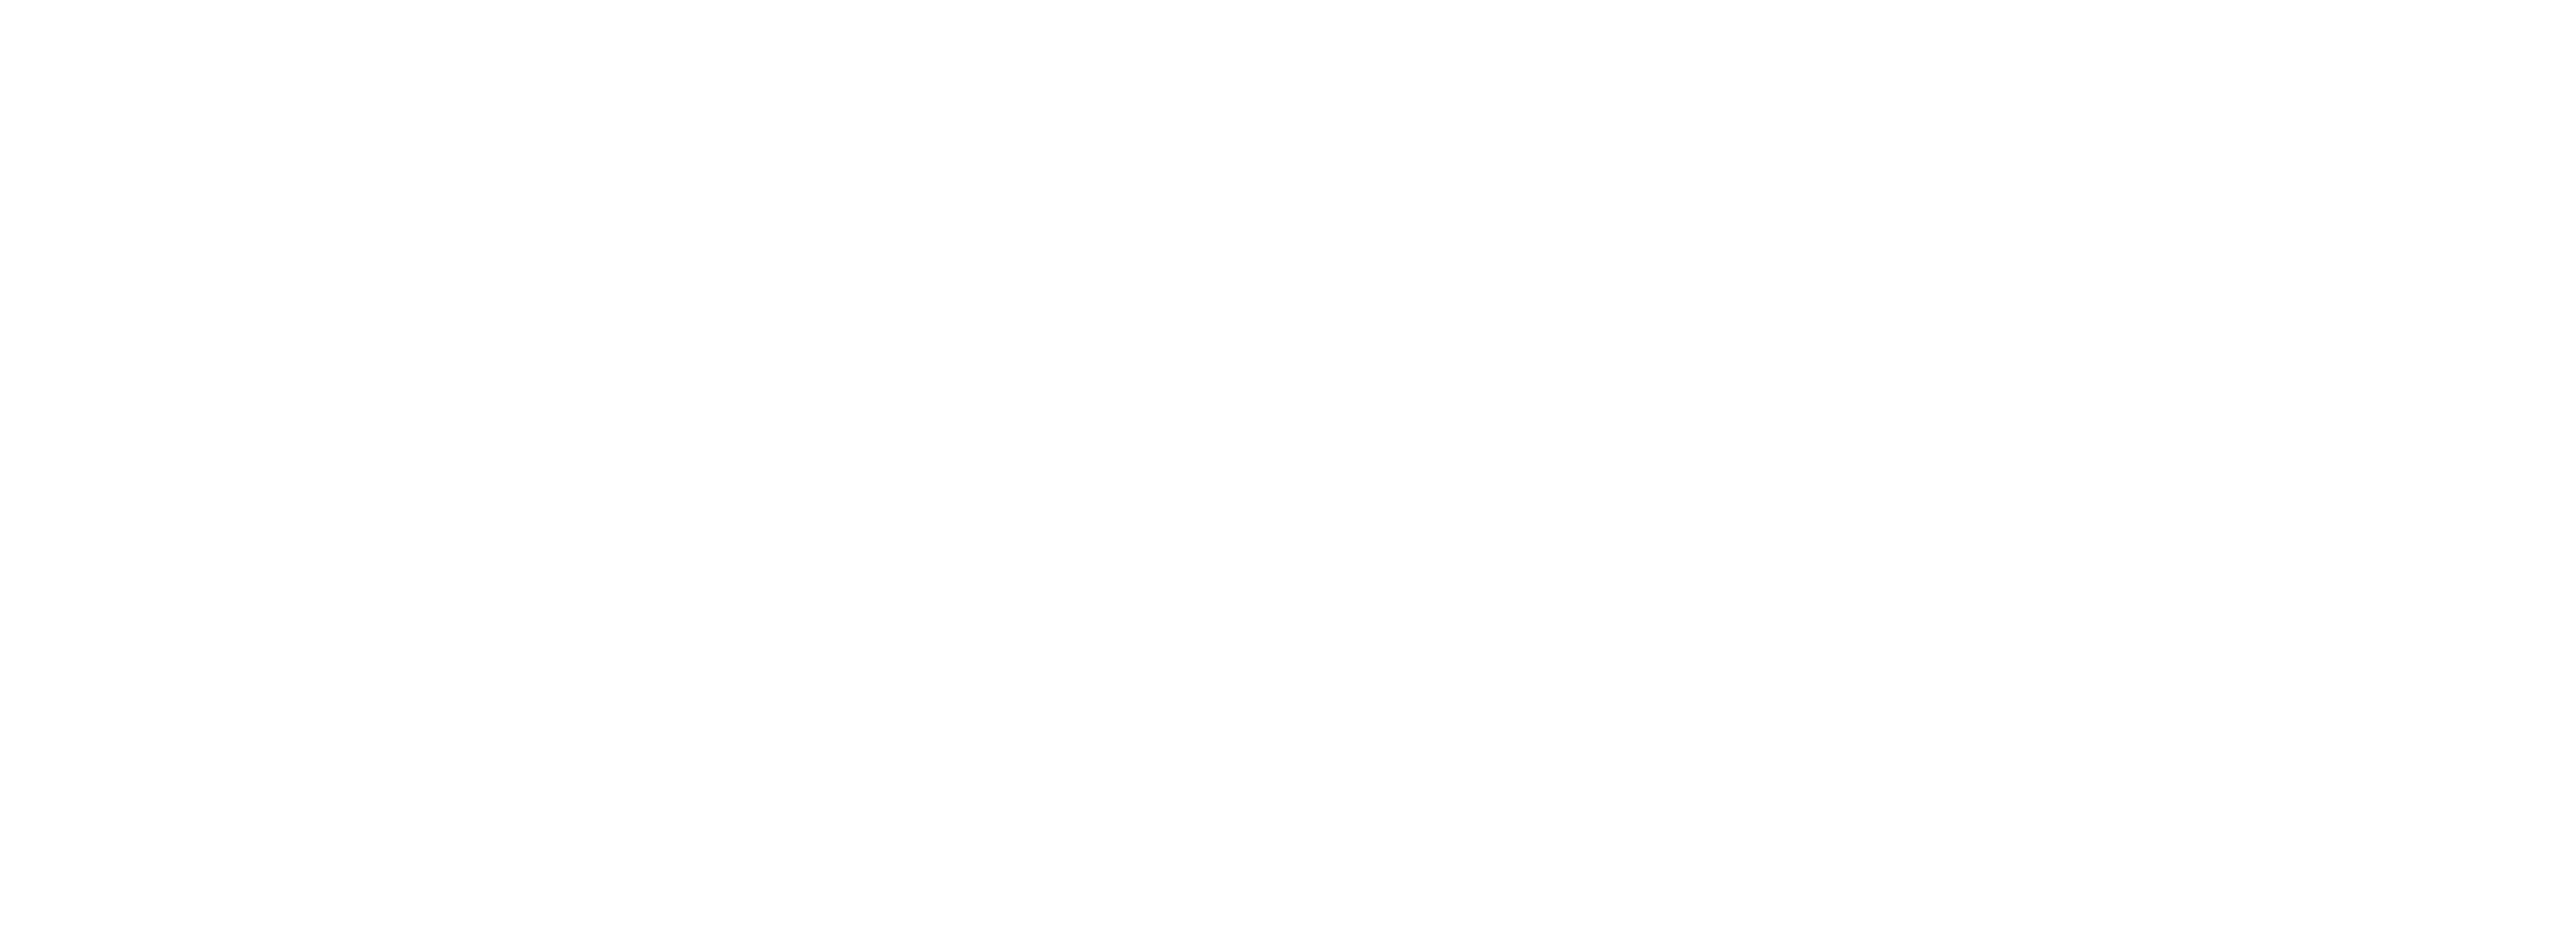 Modern Maker | Making Stuff